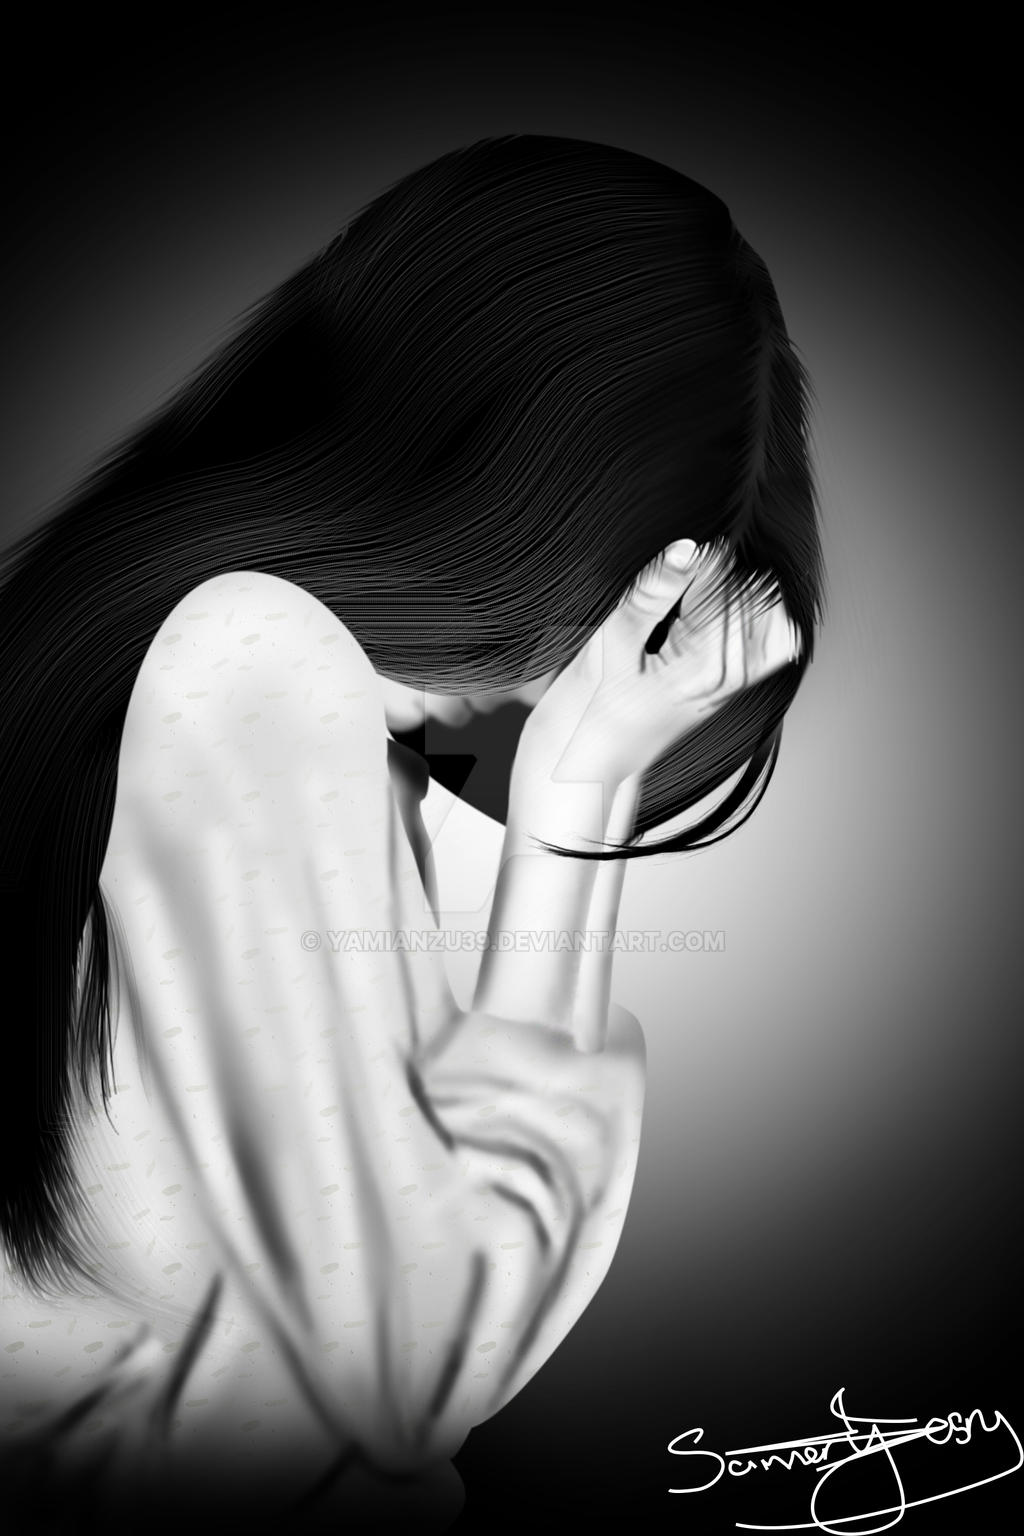 Sad girl by Lencine on DeviantArt